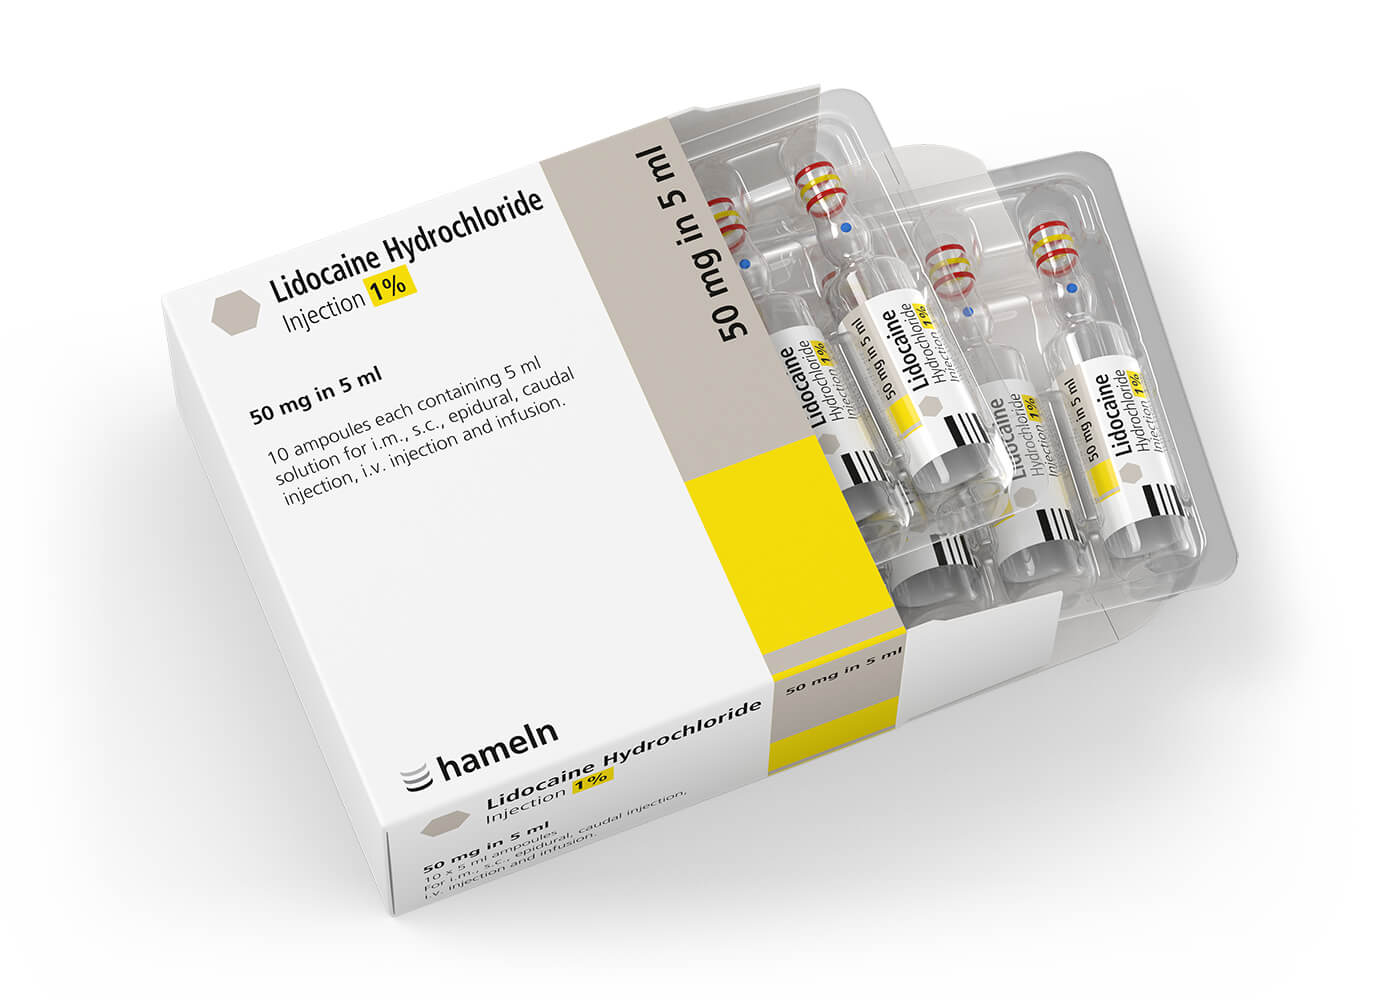 Lidocaine_UK_1pc_in_5_ml_Pack+Amp_10St_2020-05